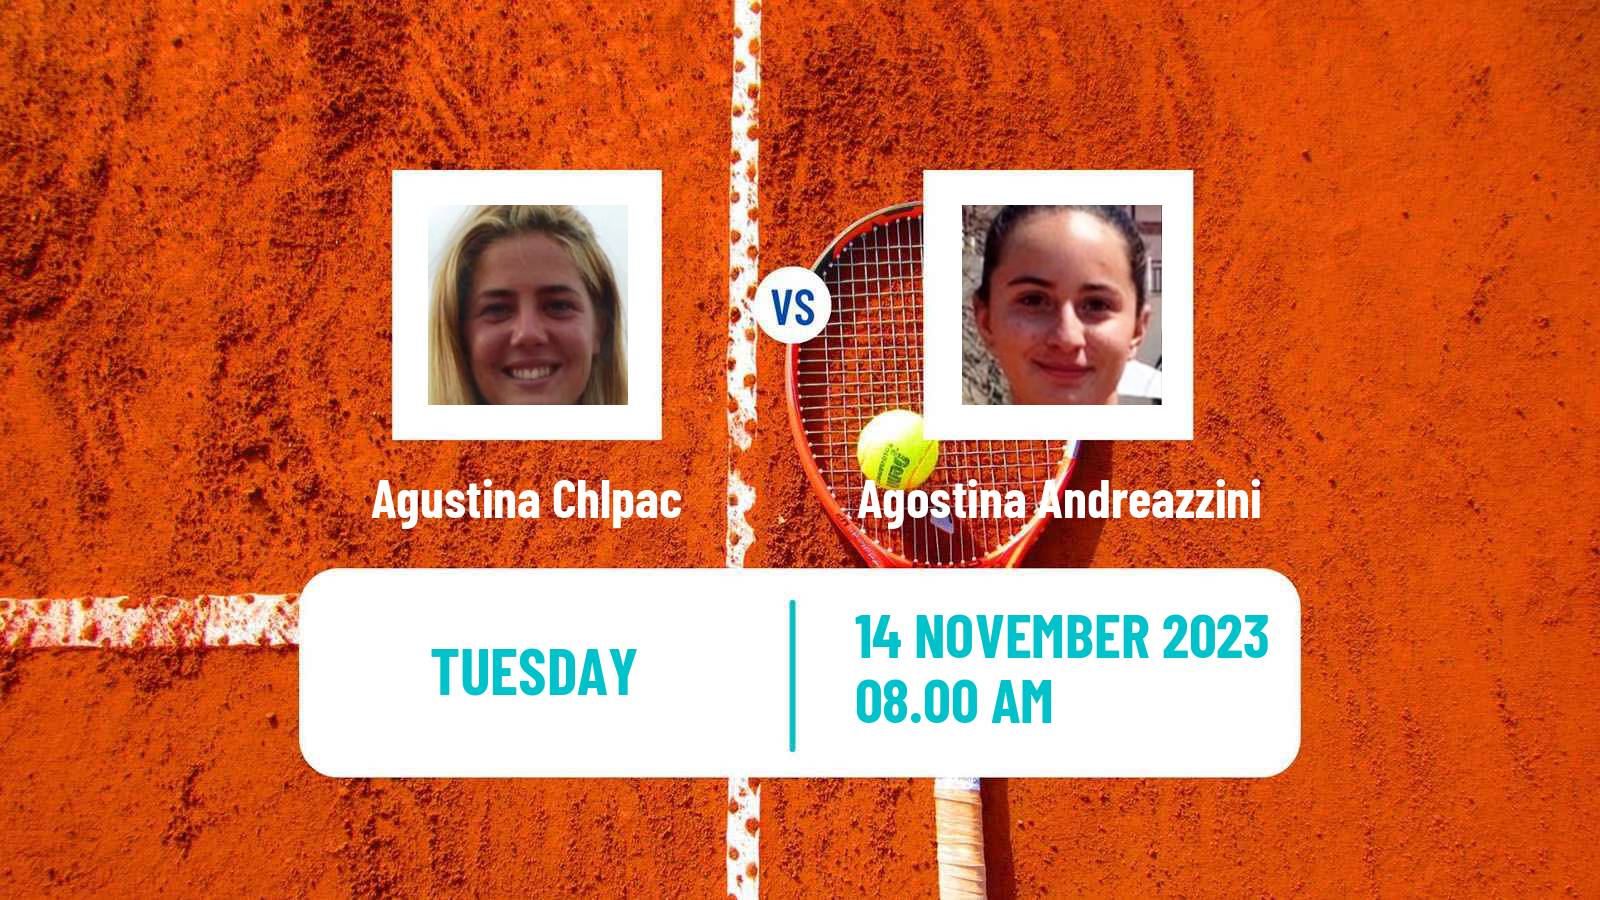 Tennis ITF W15 Buenos Aires 2 Women Agustina Chlpac - Agostina Andreazzini